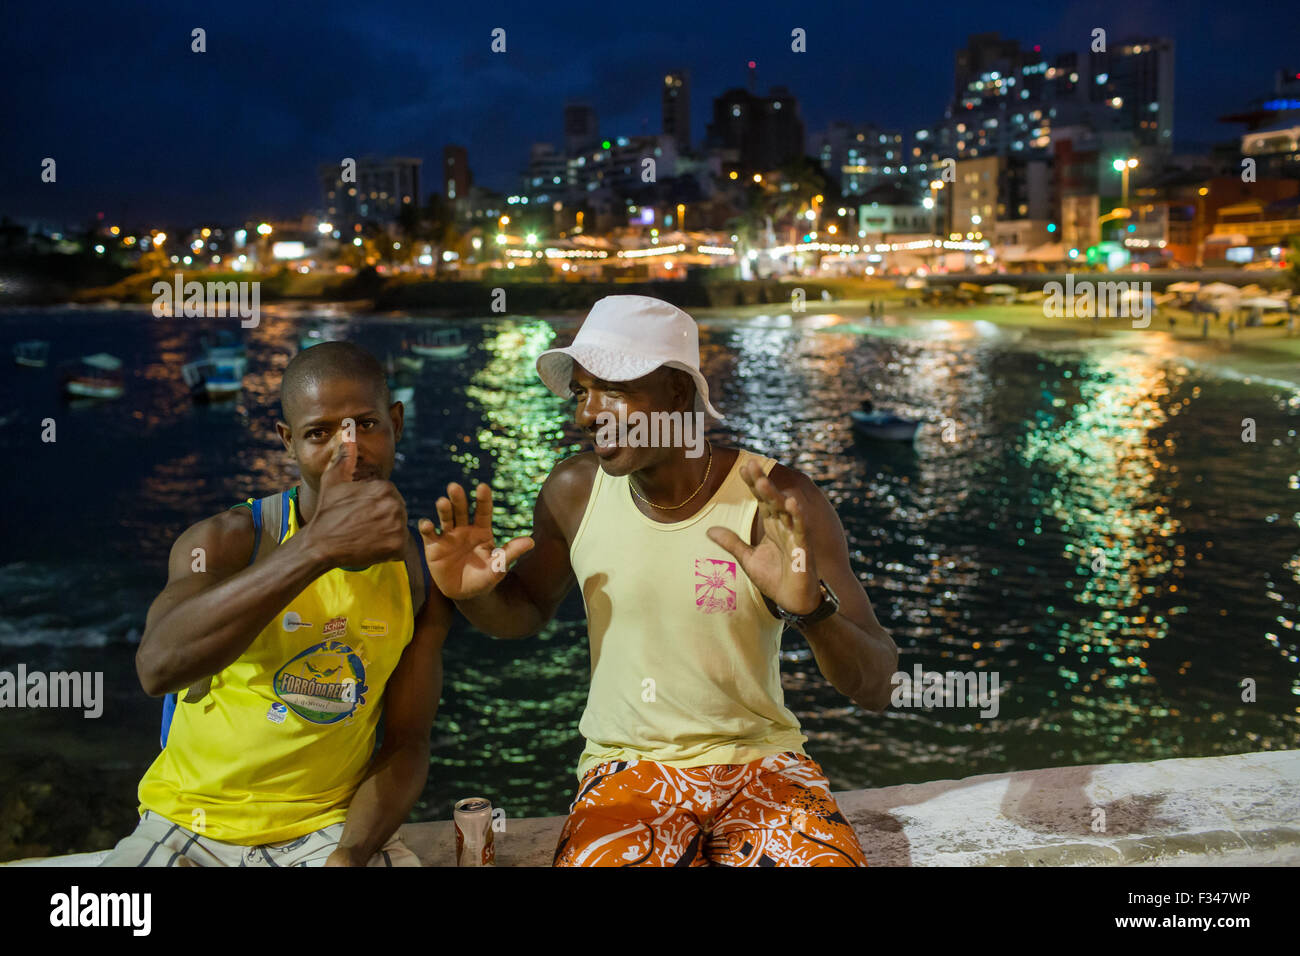 men at the Feast de Yemanja at night, Salvador da Bahia, Brazil Stock Photo